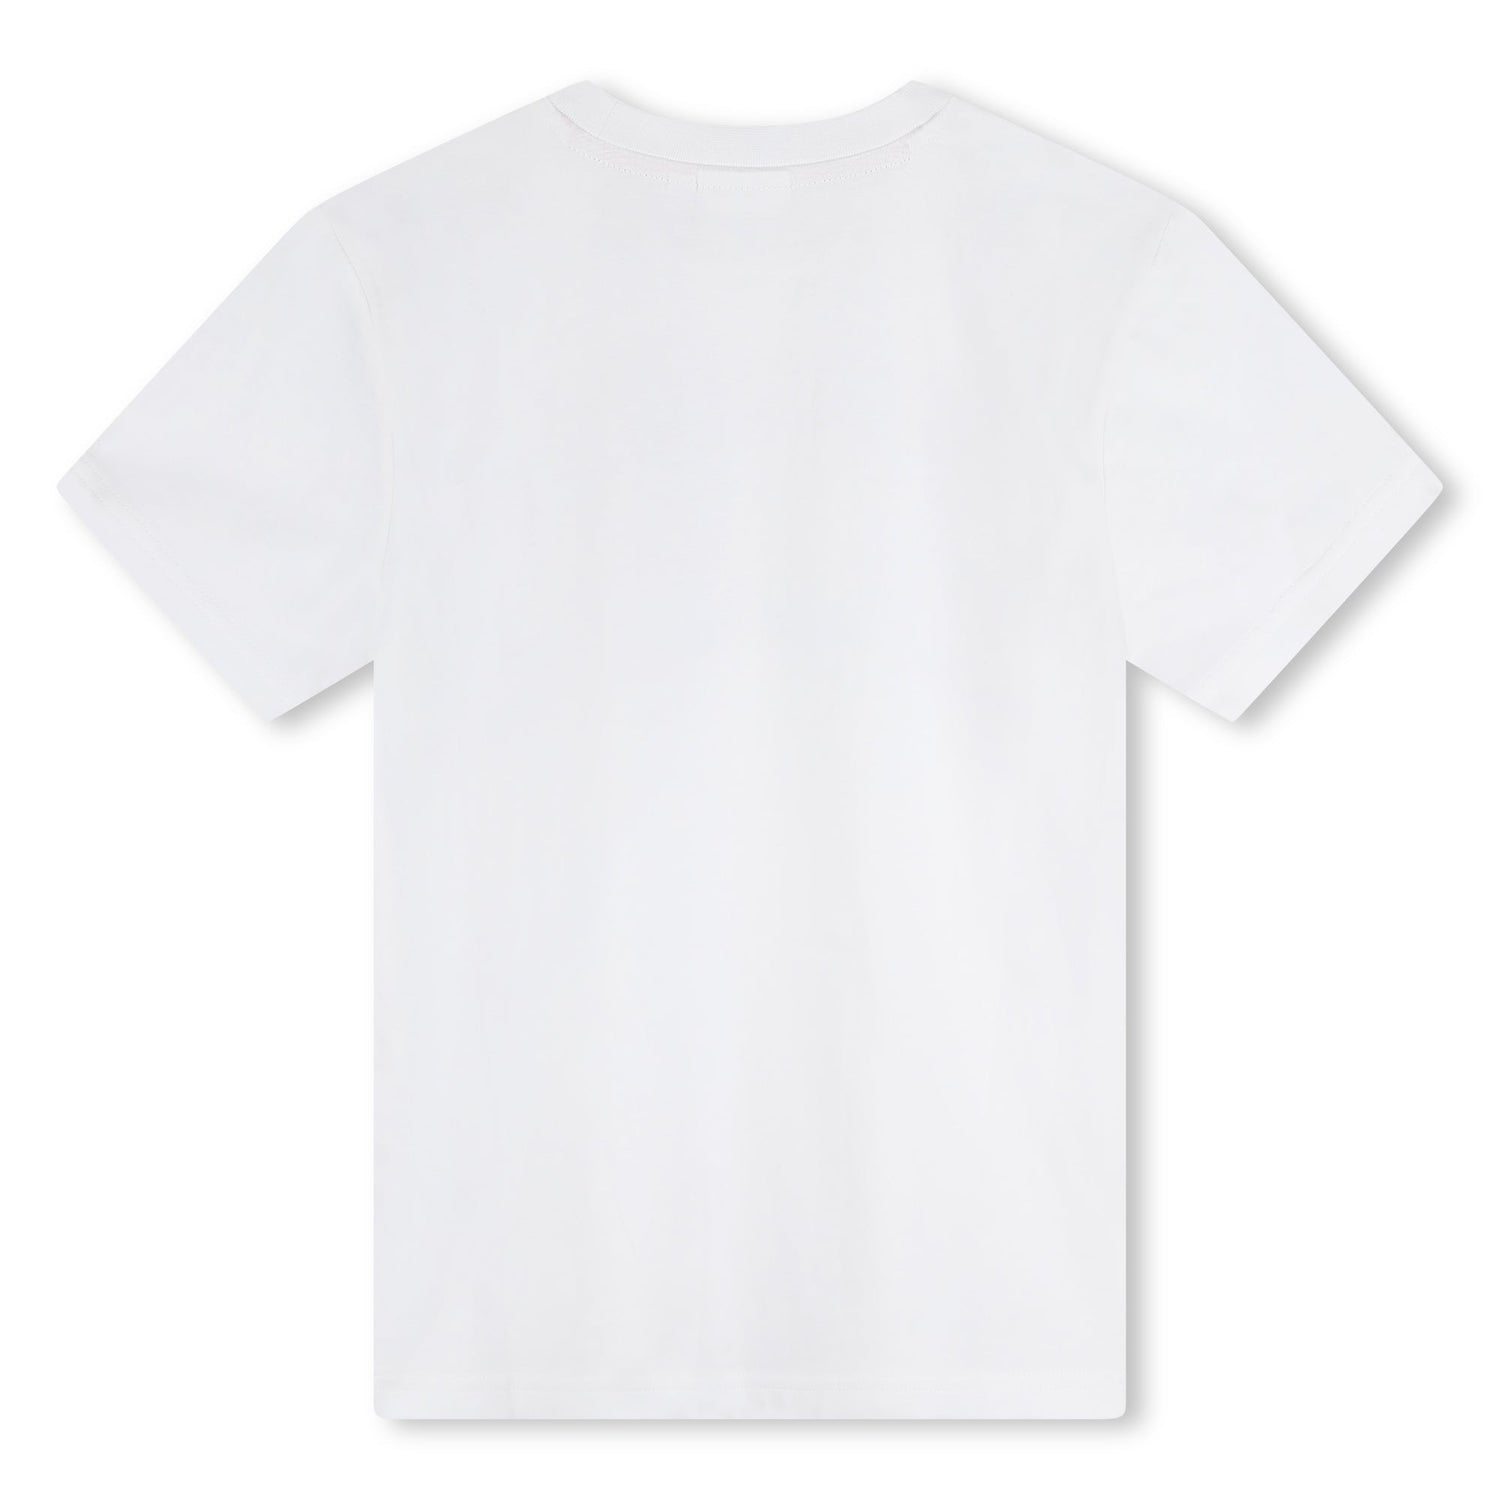 Camiseta Blanca Fantasía Niño